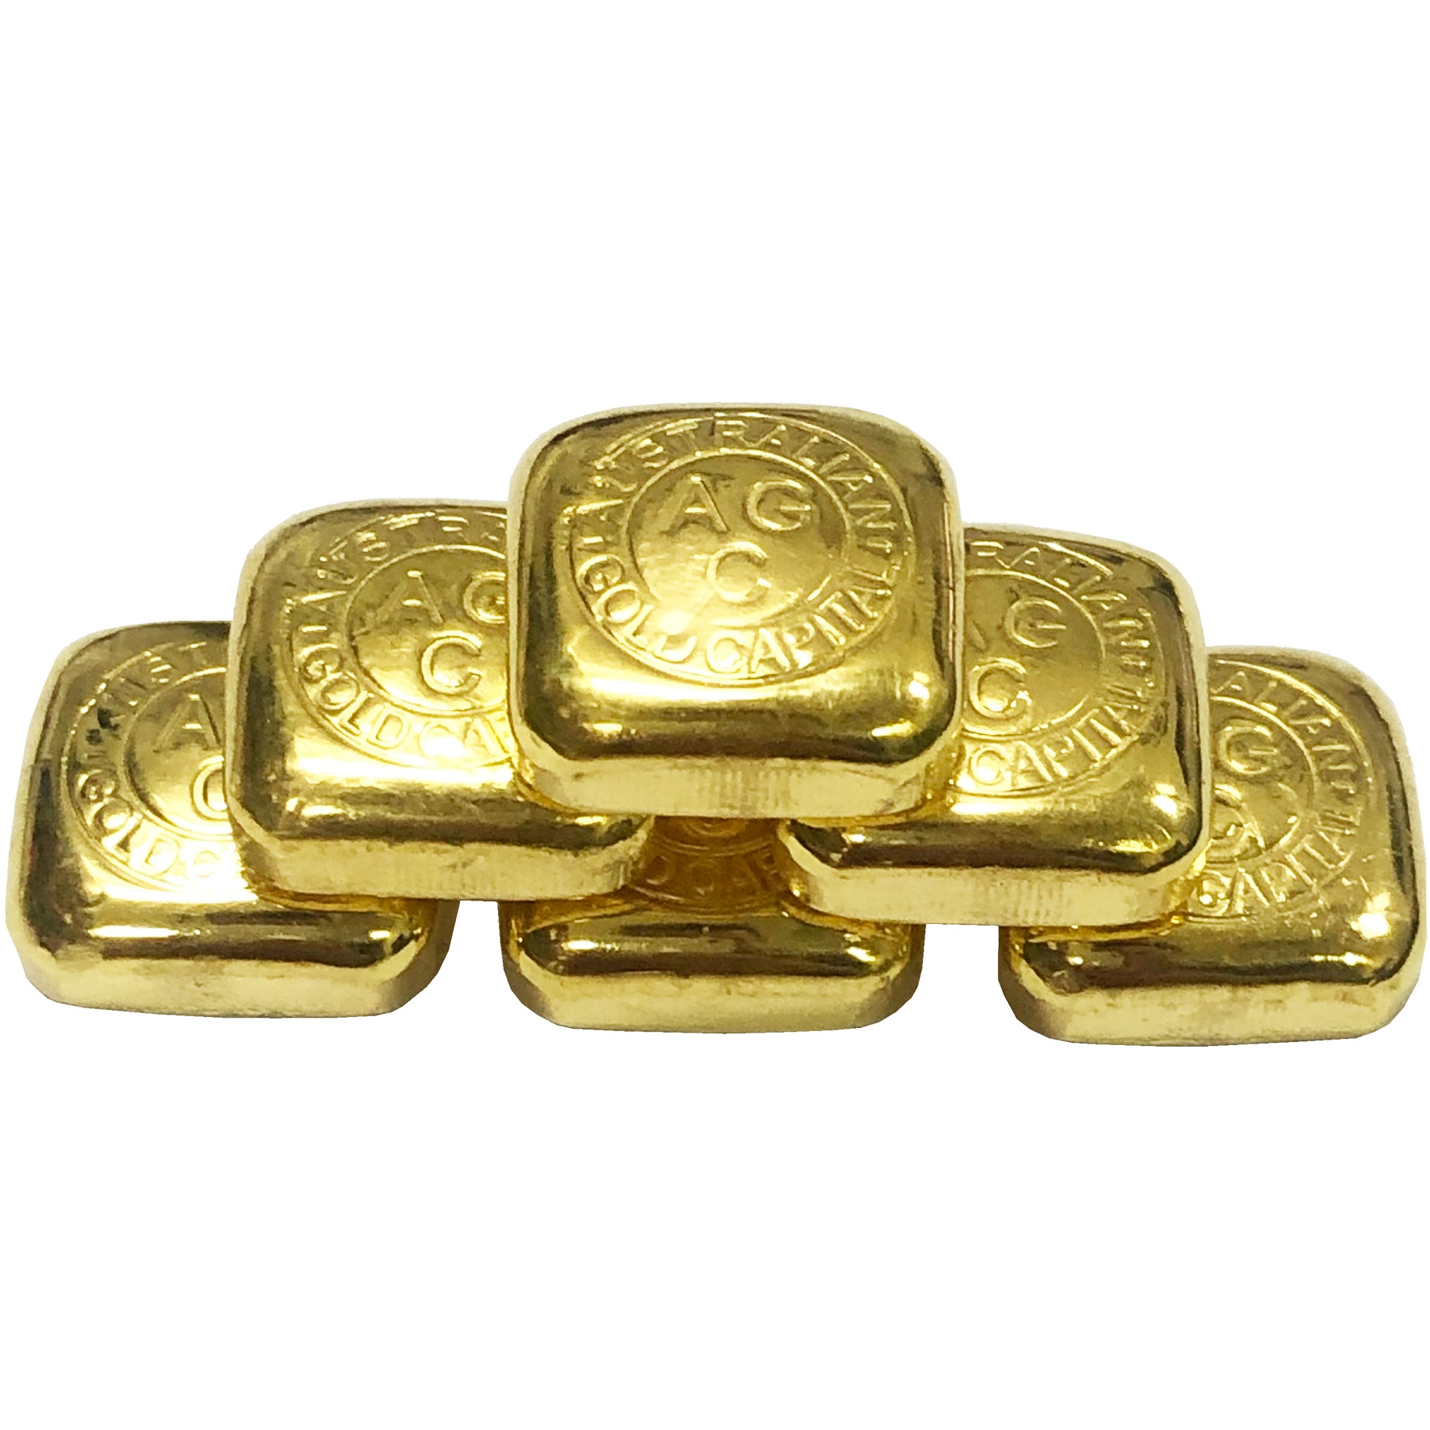 Gold Bullion Bars Pool Allocated Gold Bullion Share : 1oz